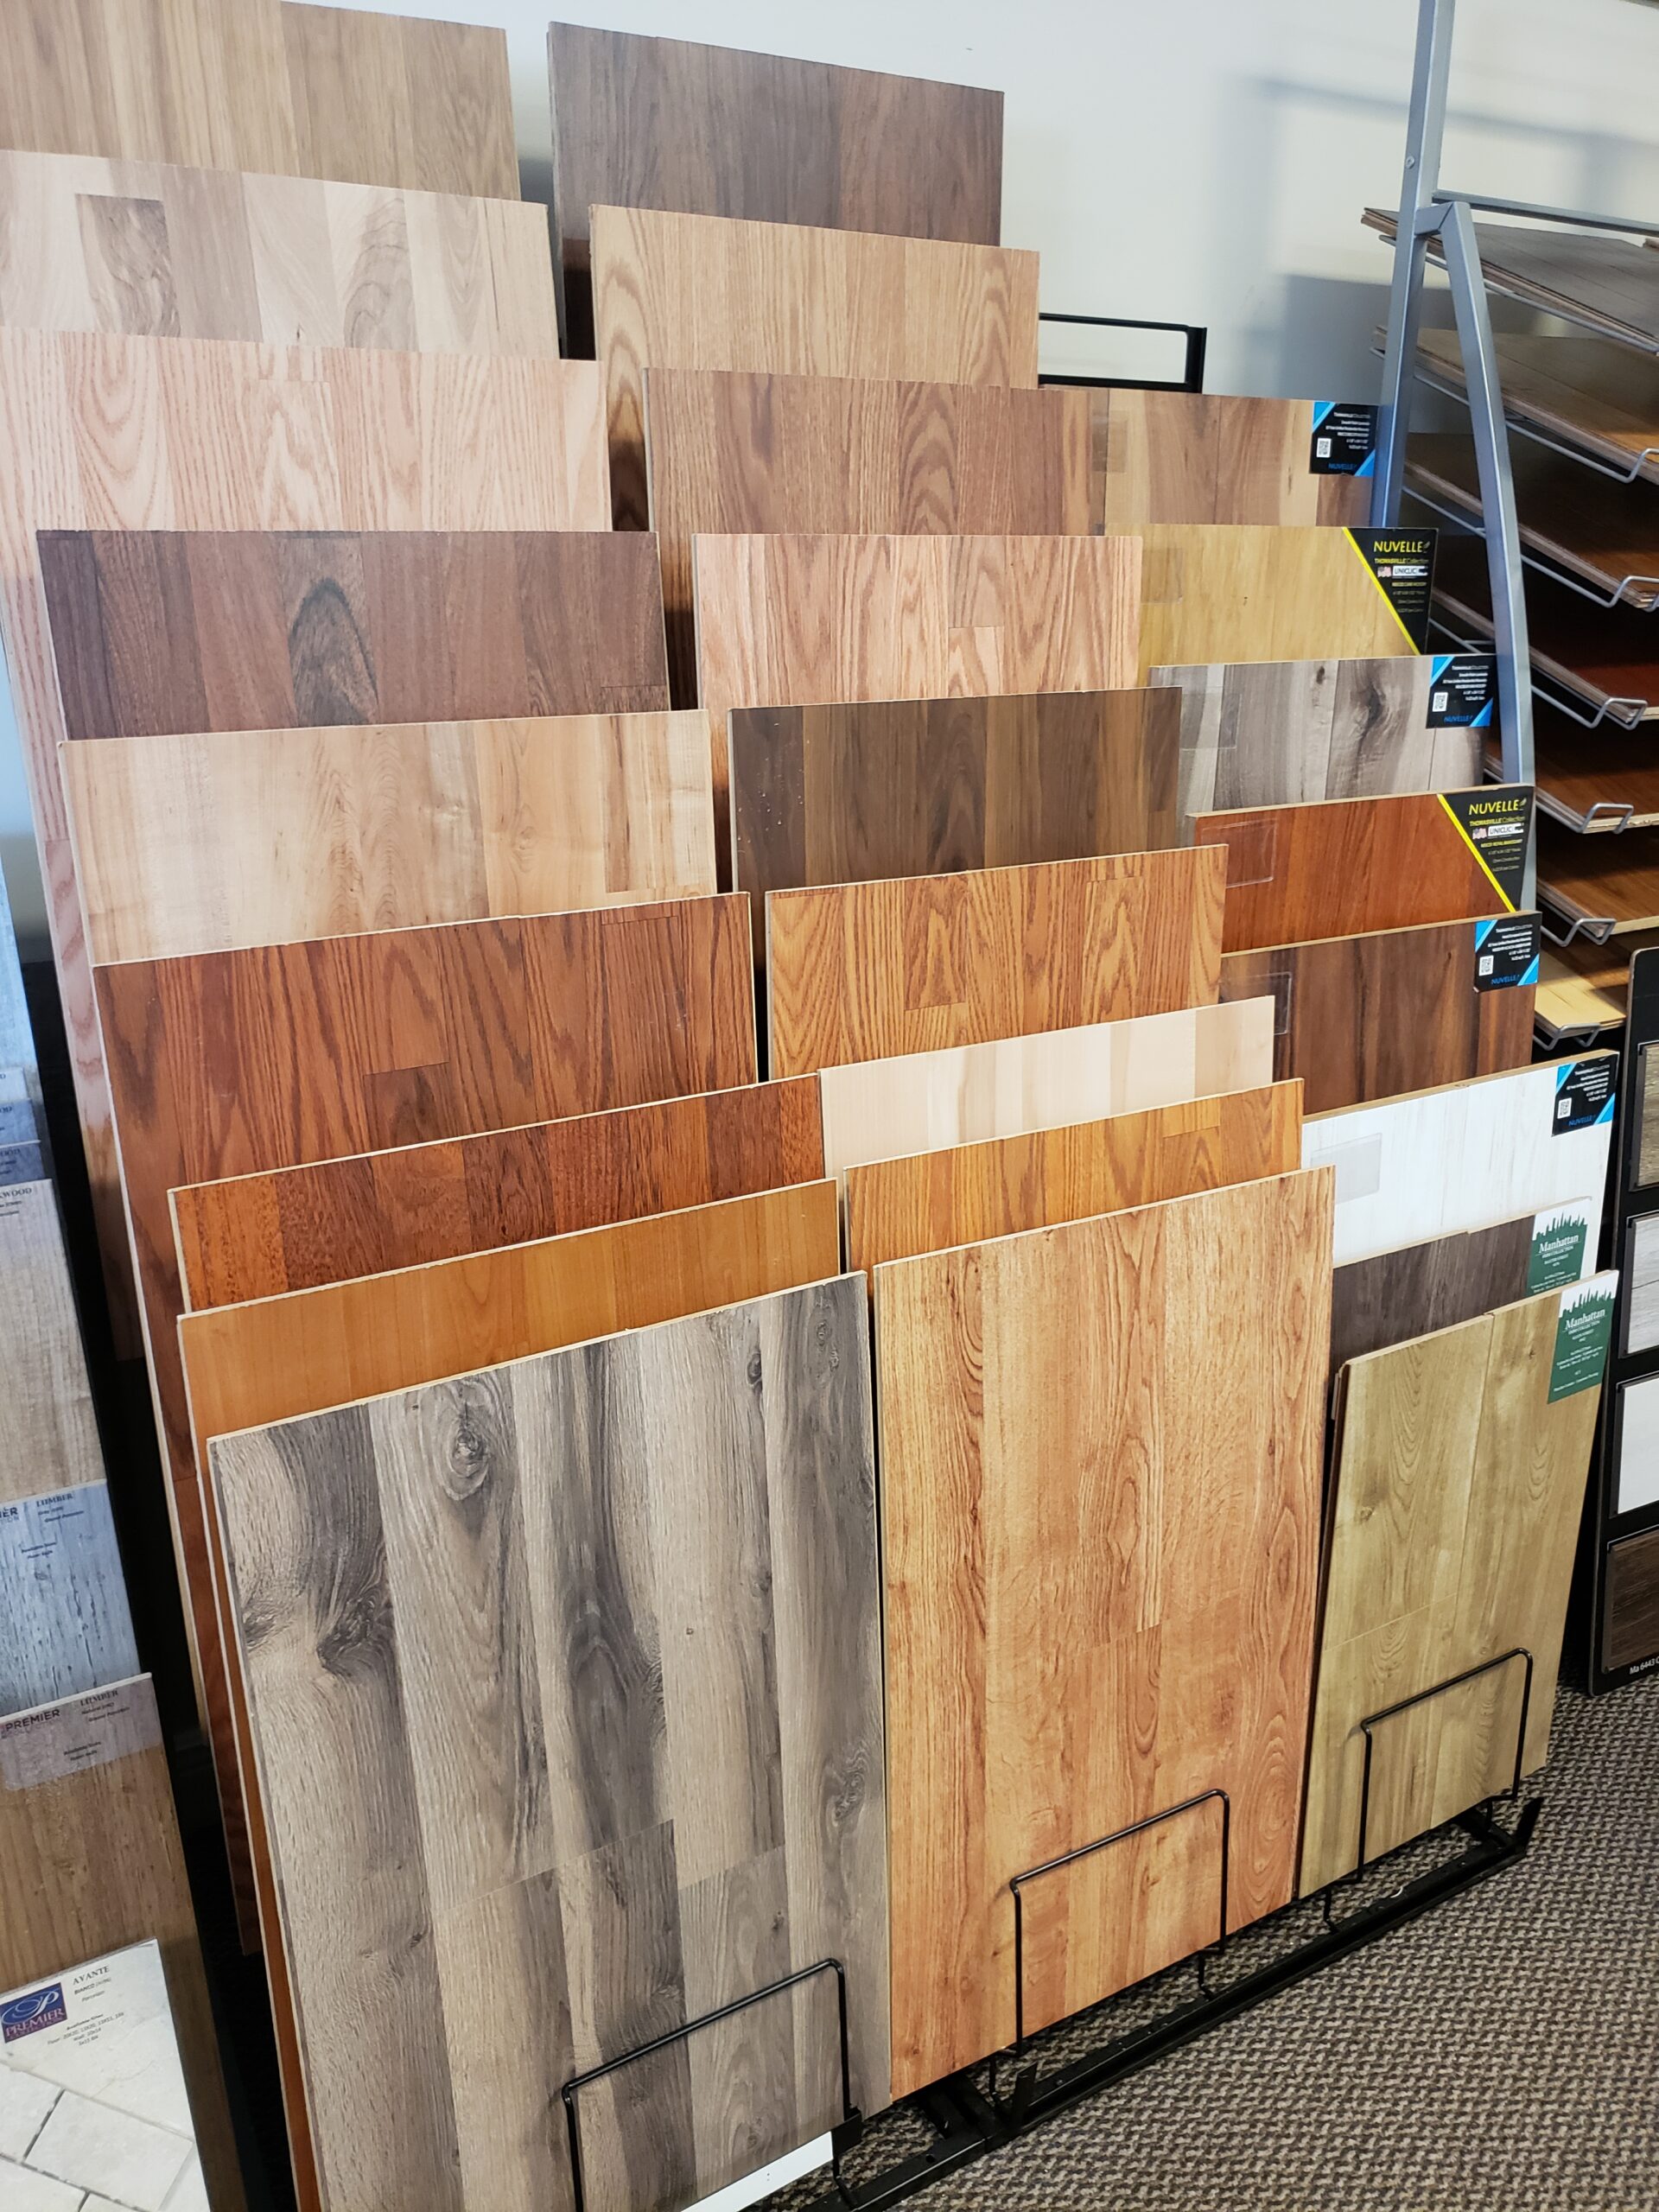 Tricolor Flooring's assortment of floor samples in a rack